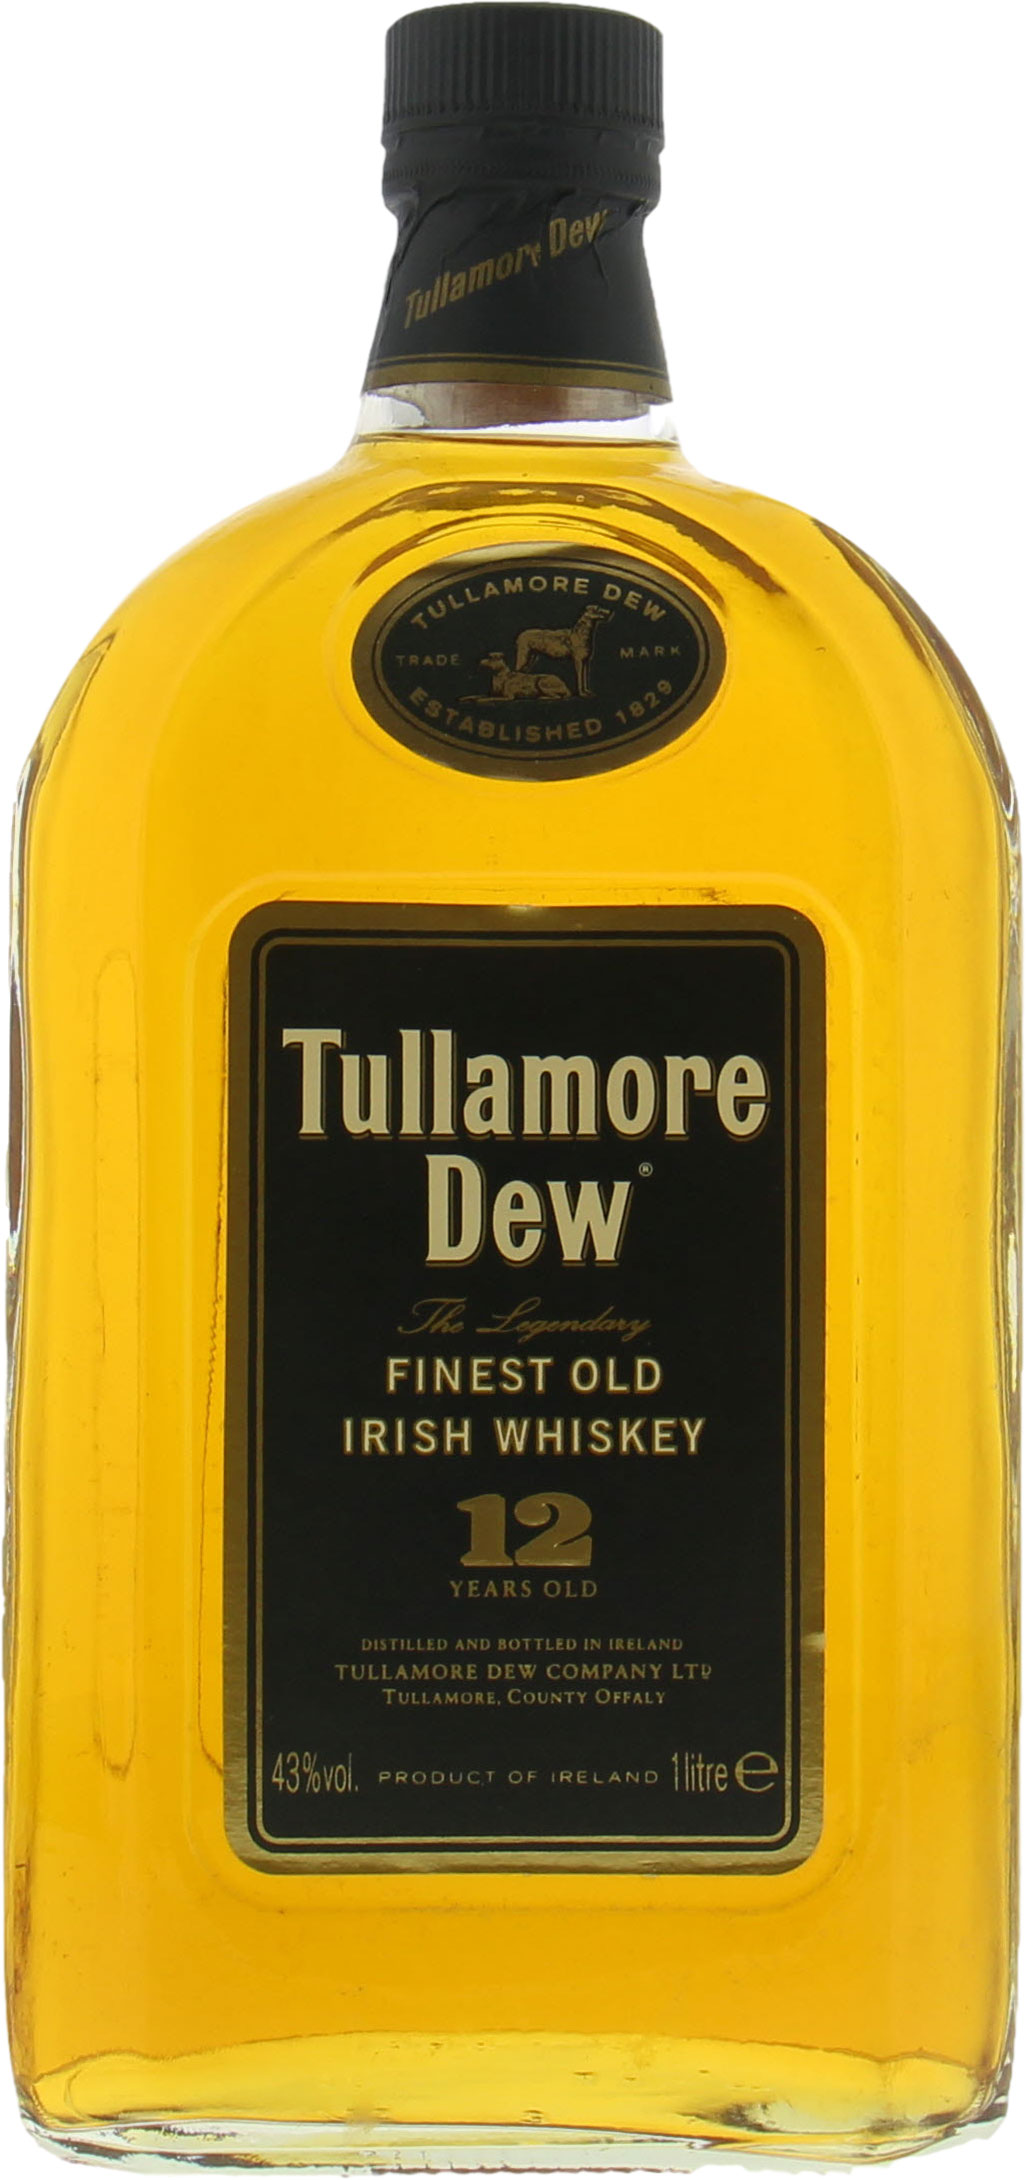 Midleton (1975-) - Tullamore Dew 12 Years Old 43% NV Perfect